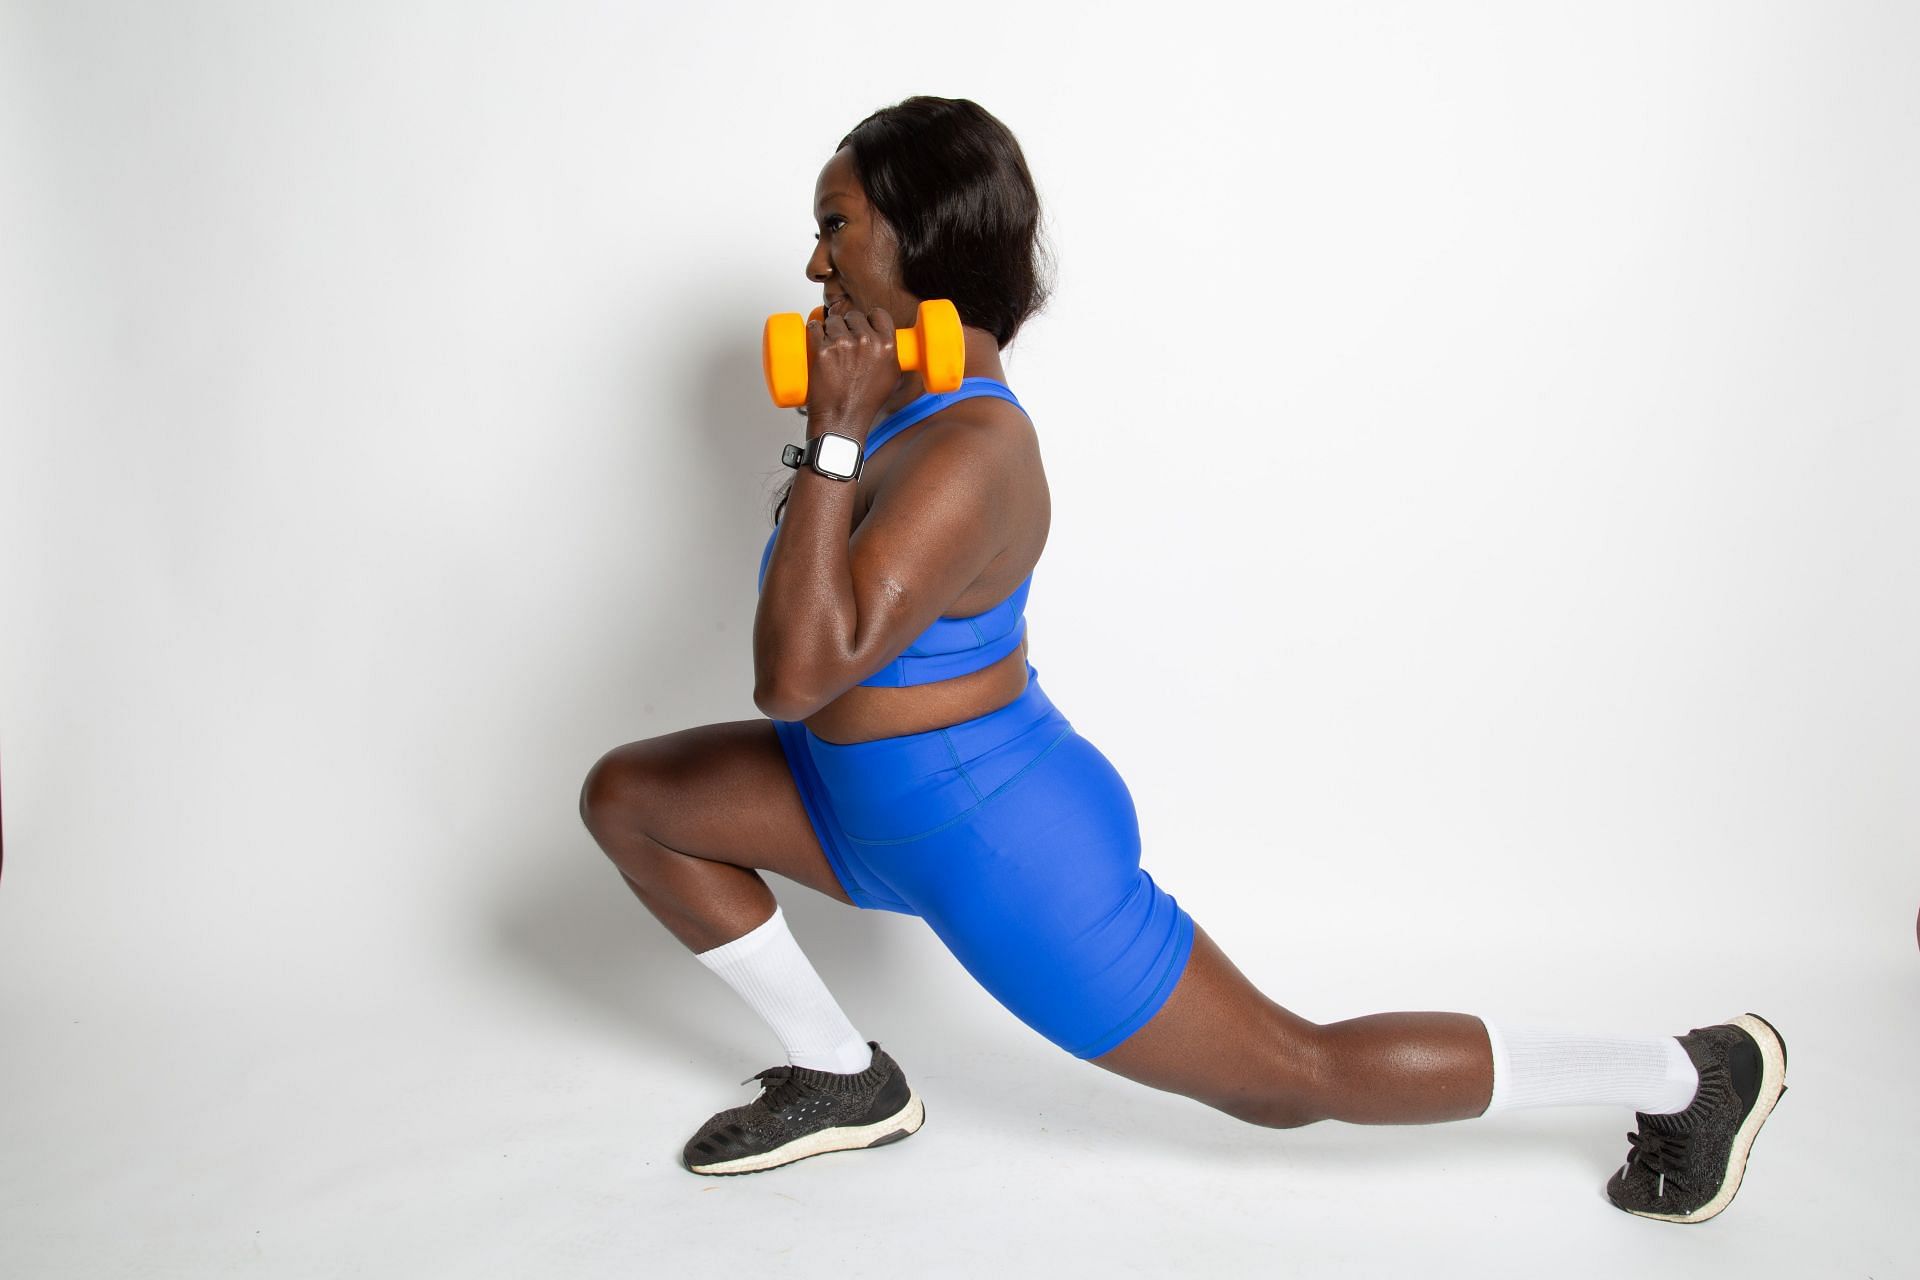 Stretching before workout is important. (Image via Unsplash/April Laugh)